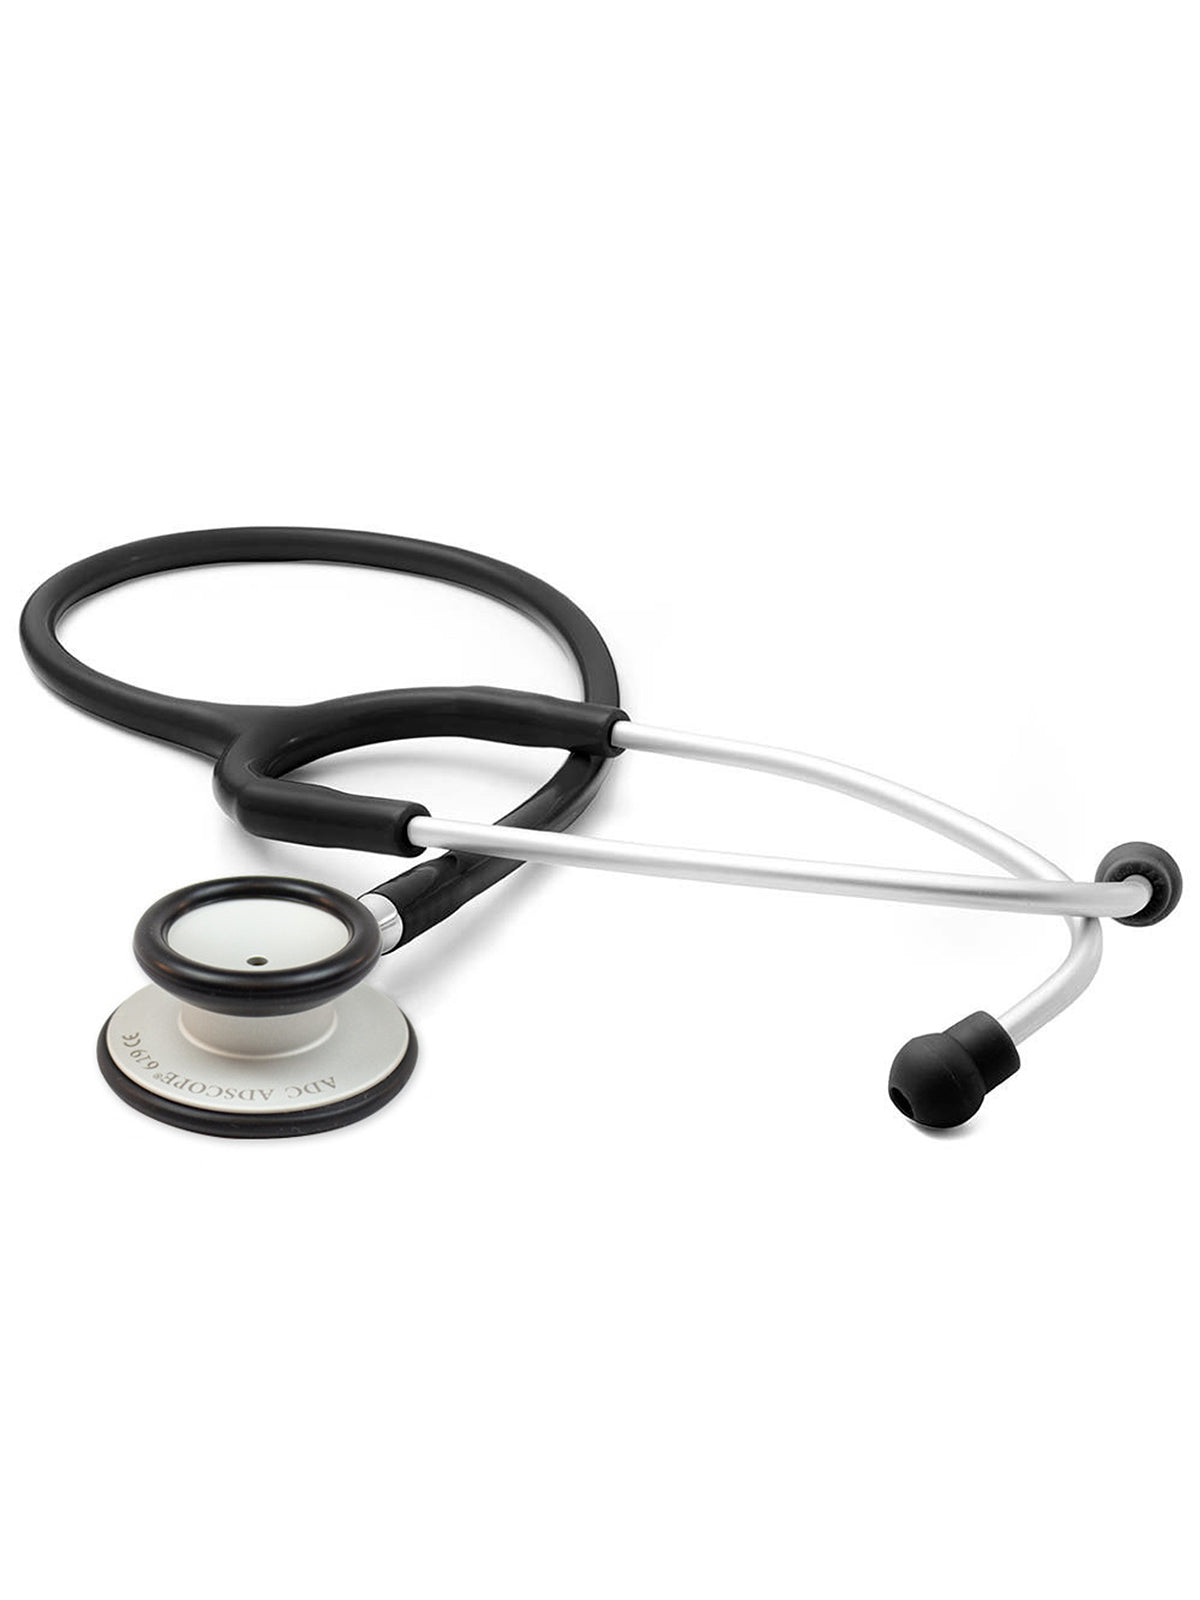 Student / Lightweight Clinician Stethoscope - AD619 - Black